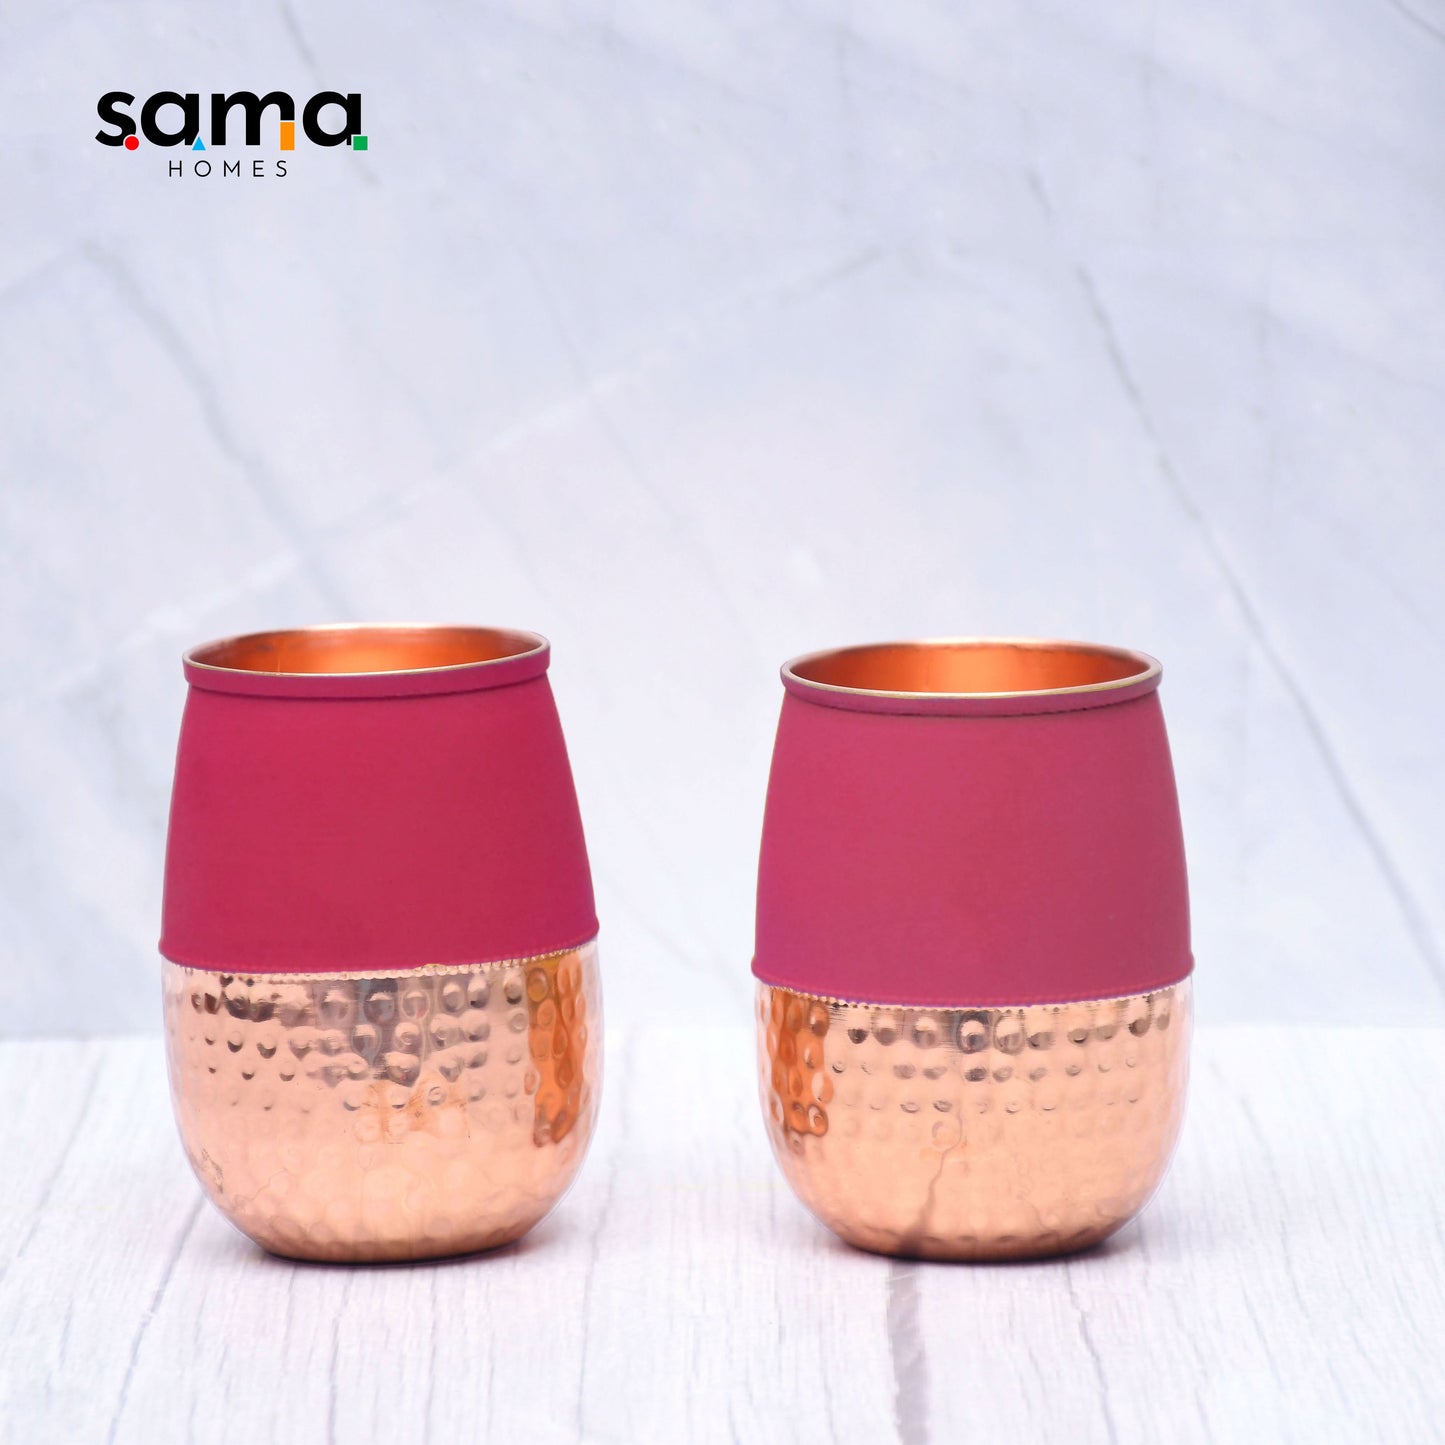 SAMA Homes - pure copper water glass silk red cherry half hammered dholak tumbler capacity 250ml